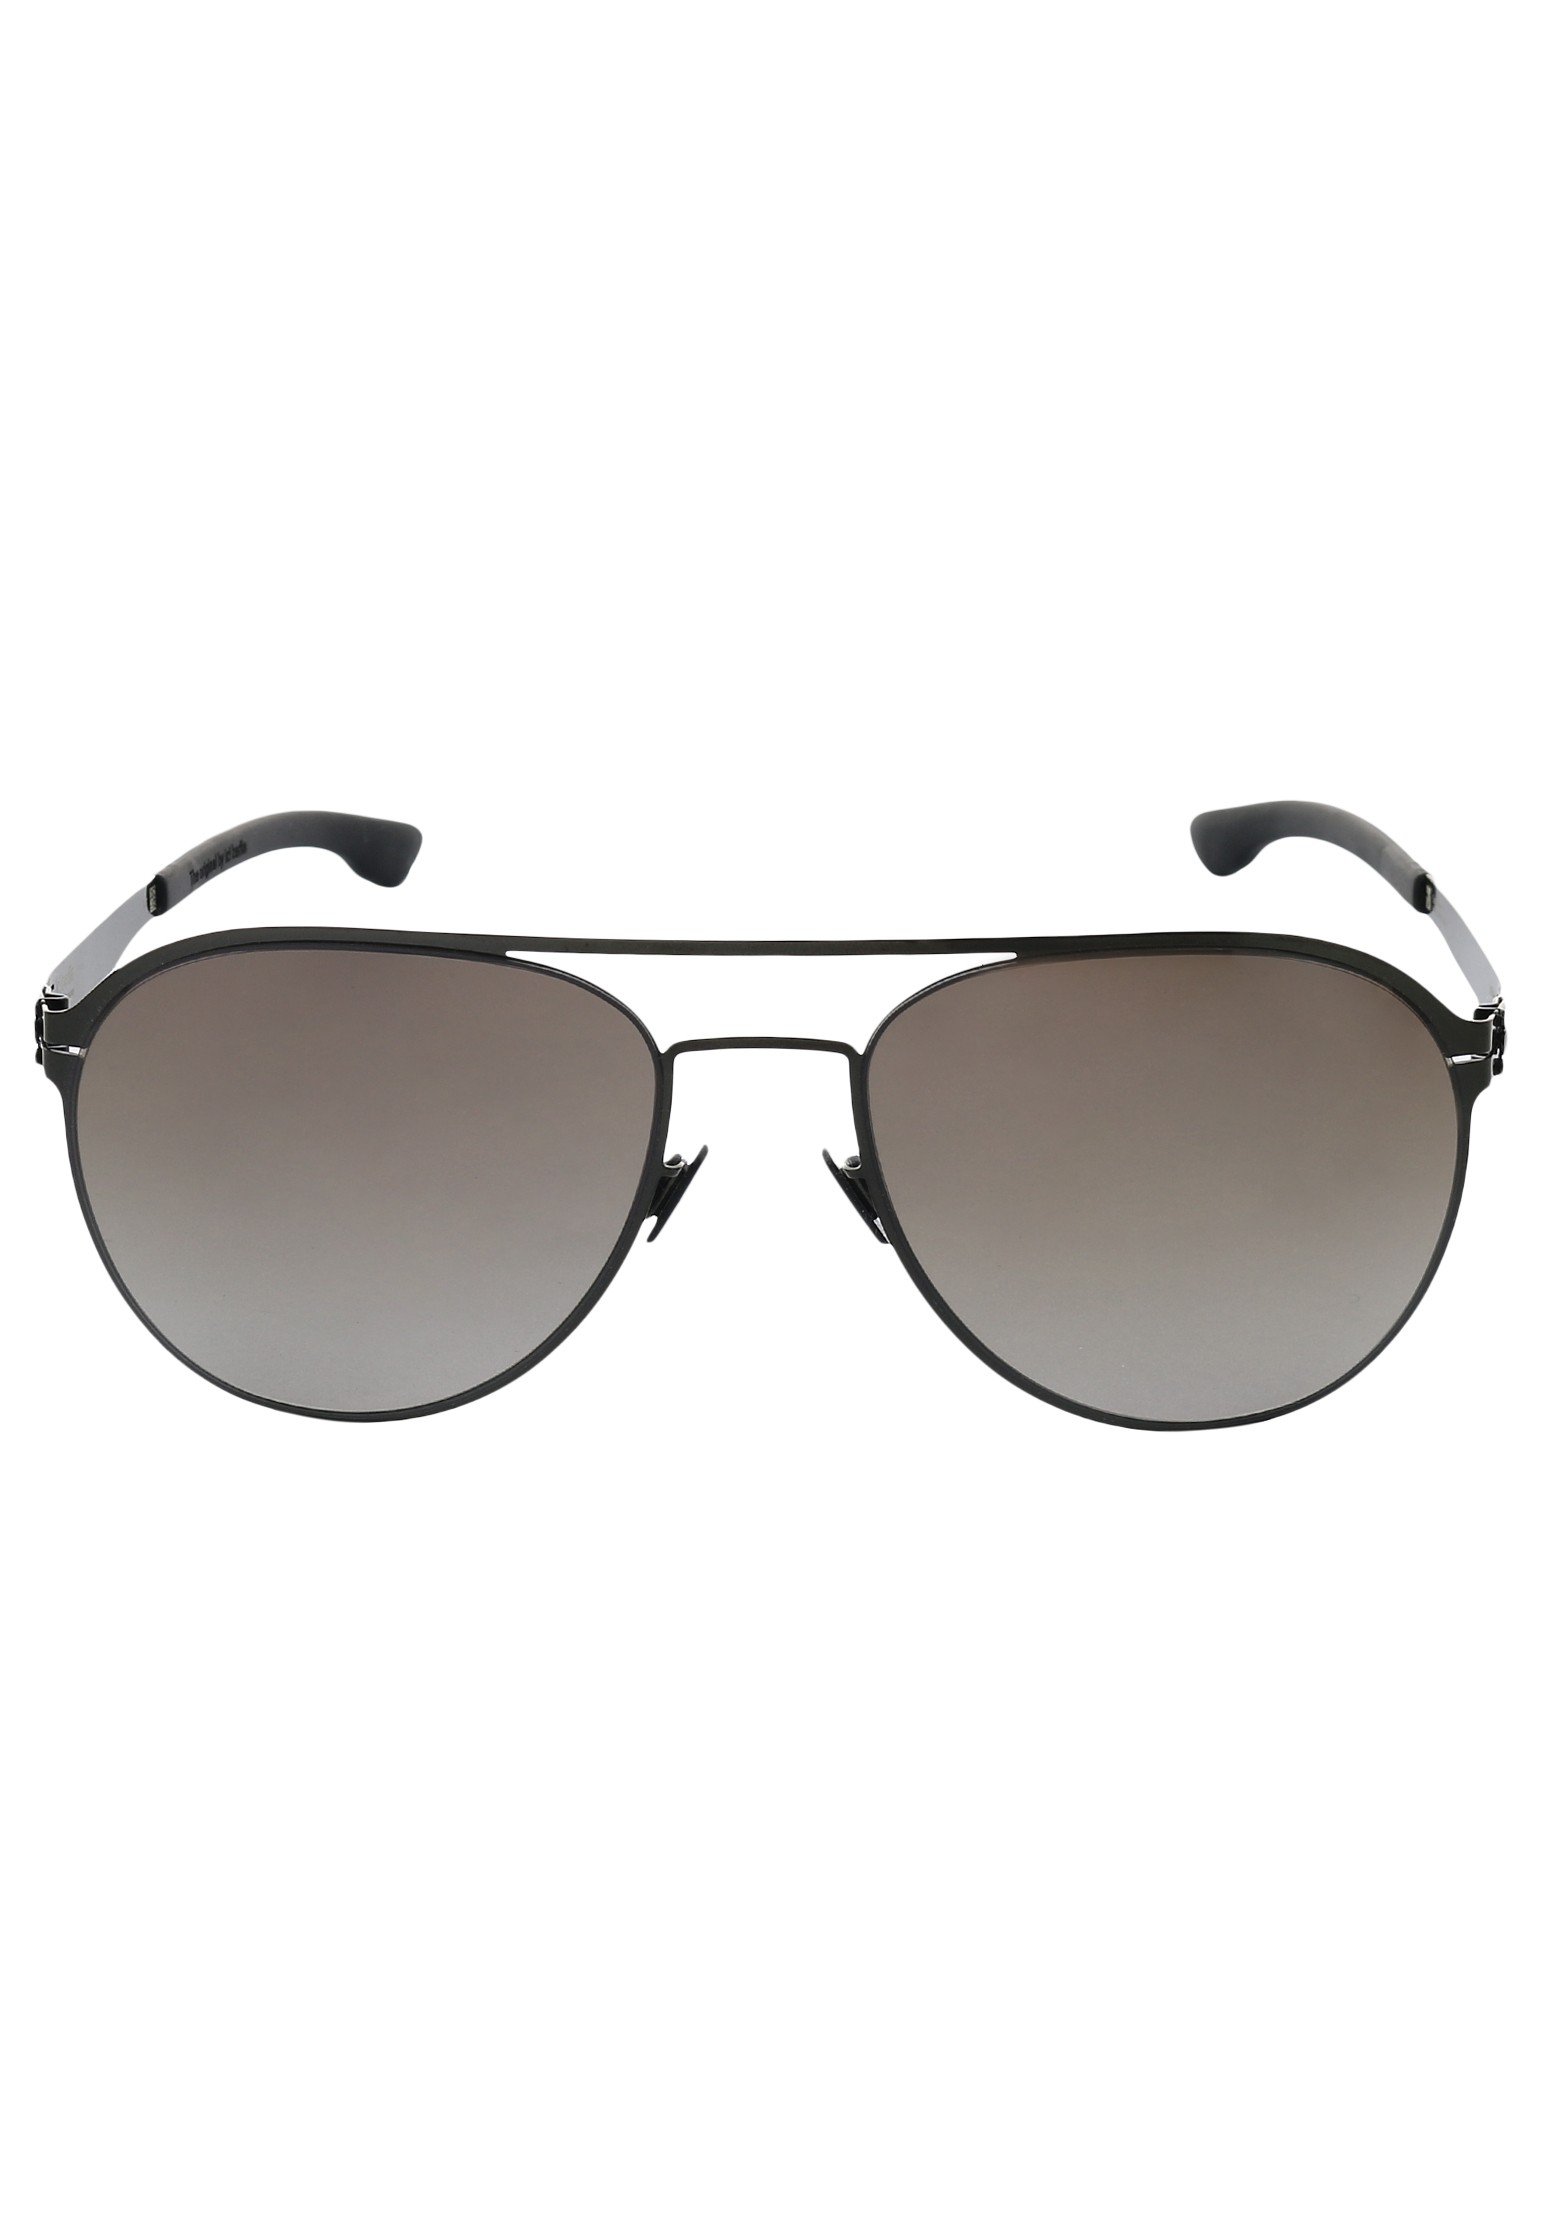 Sunglasses IC-BERLIN Color: brown (Code: 506) in online store Allure